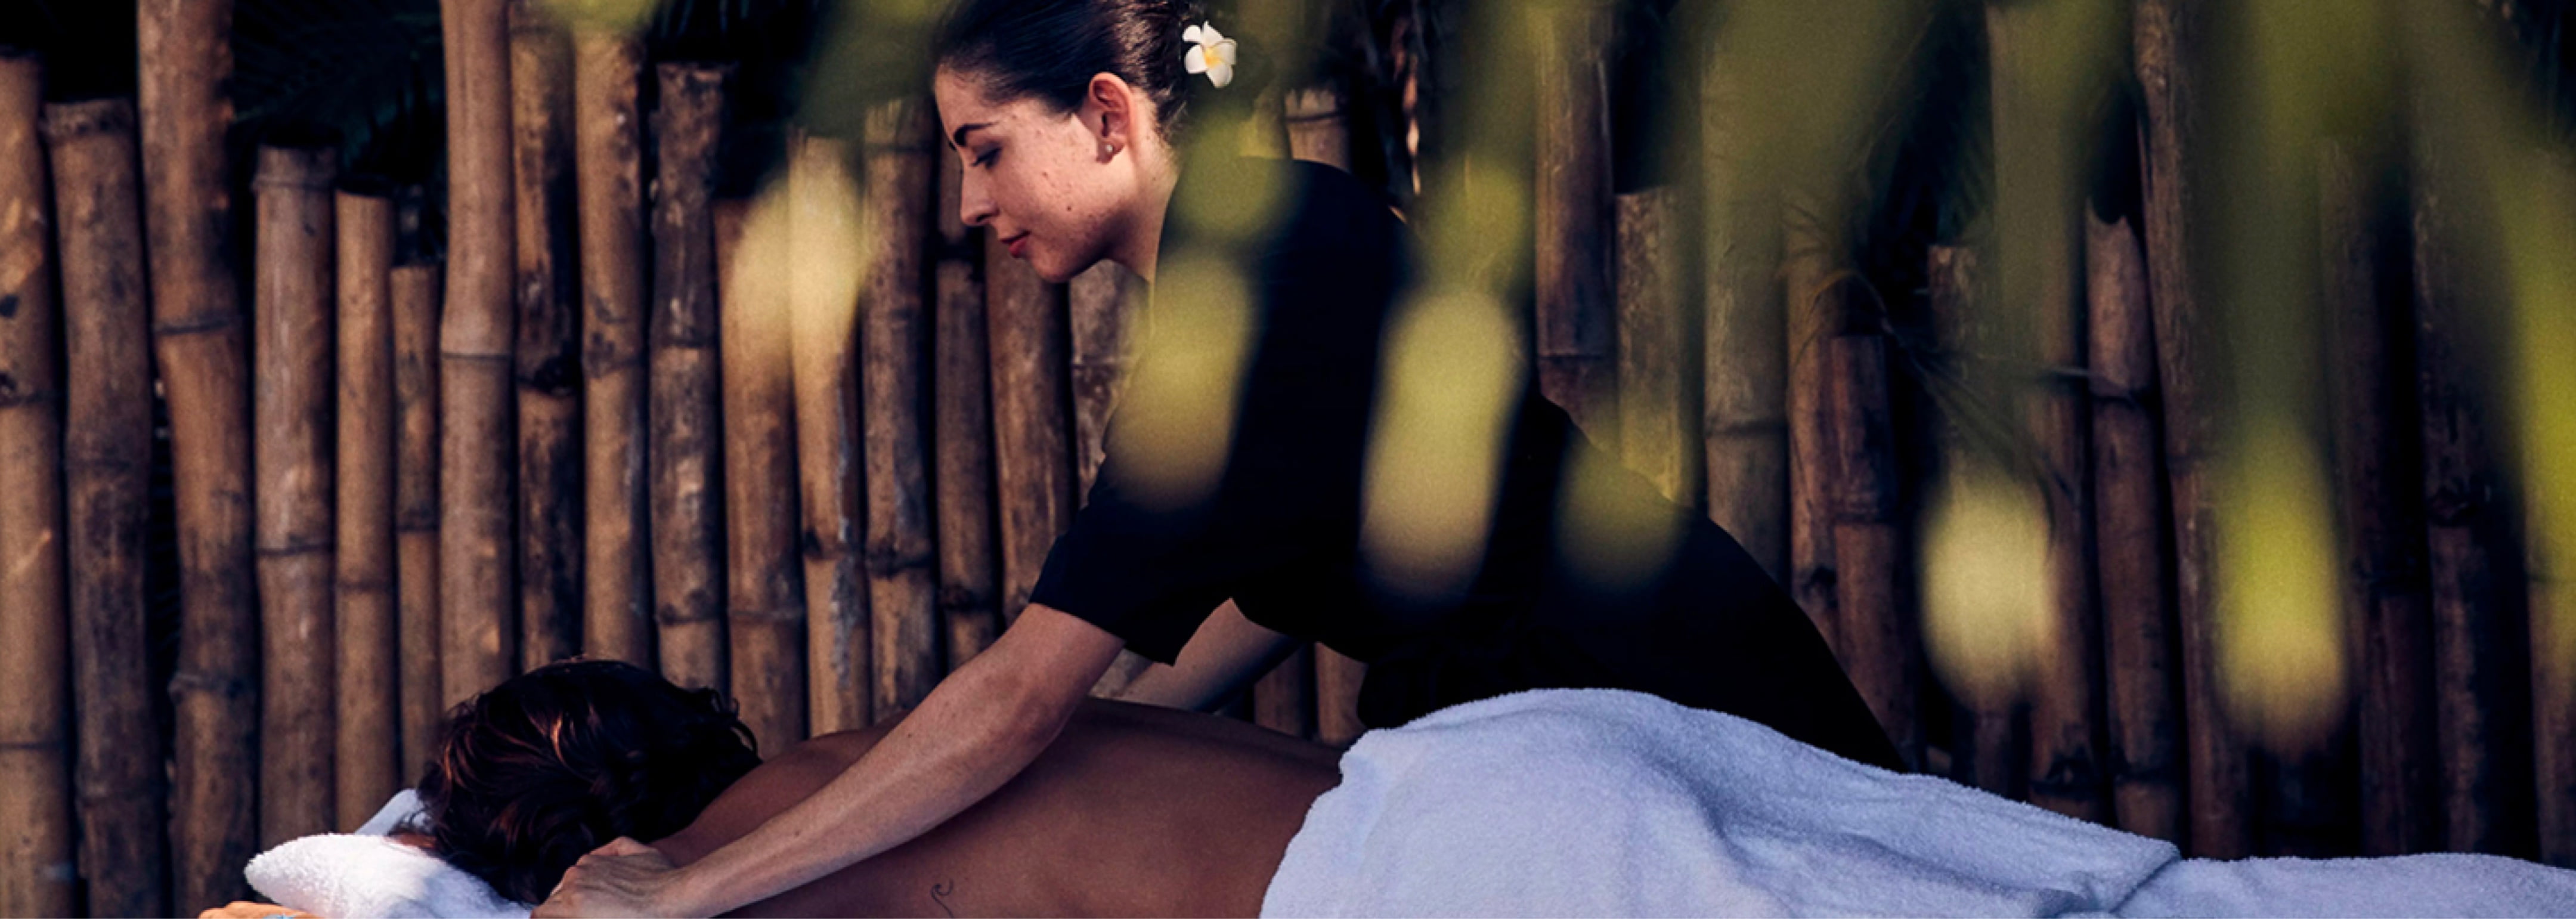 woman giving a massage